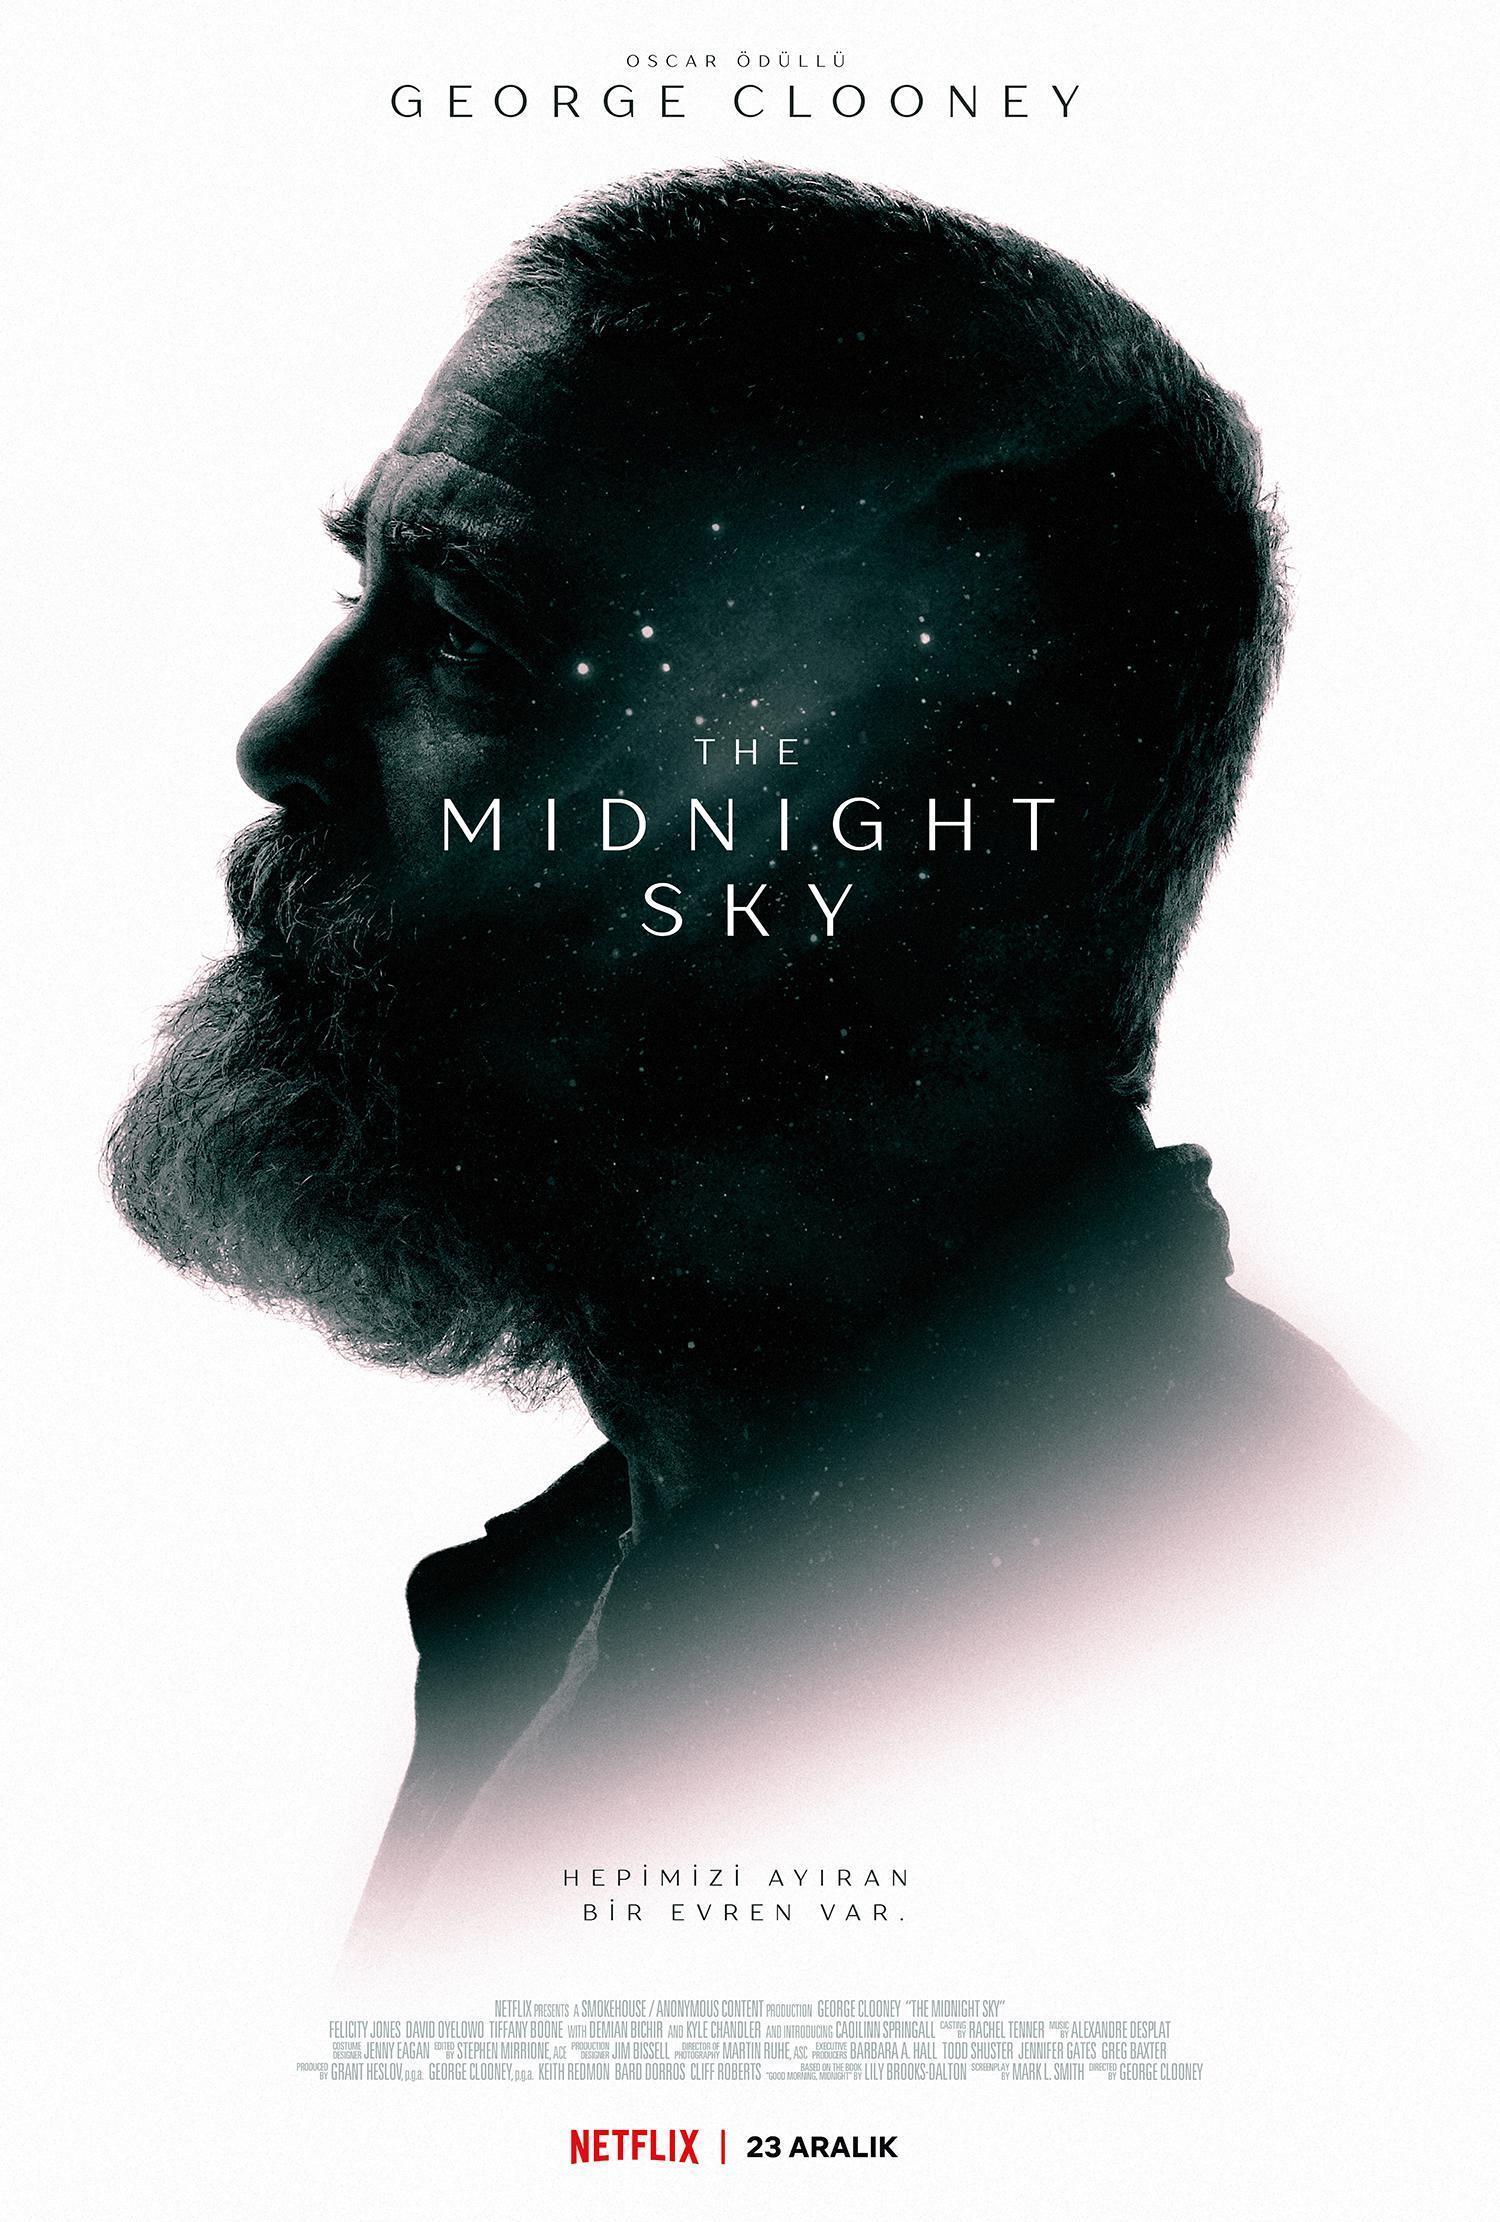 The Midnight Sky: Clooney’nin hipnotik bilimkurgu filmi önerisi